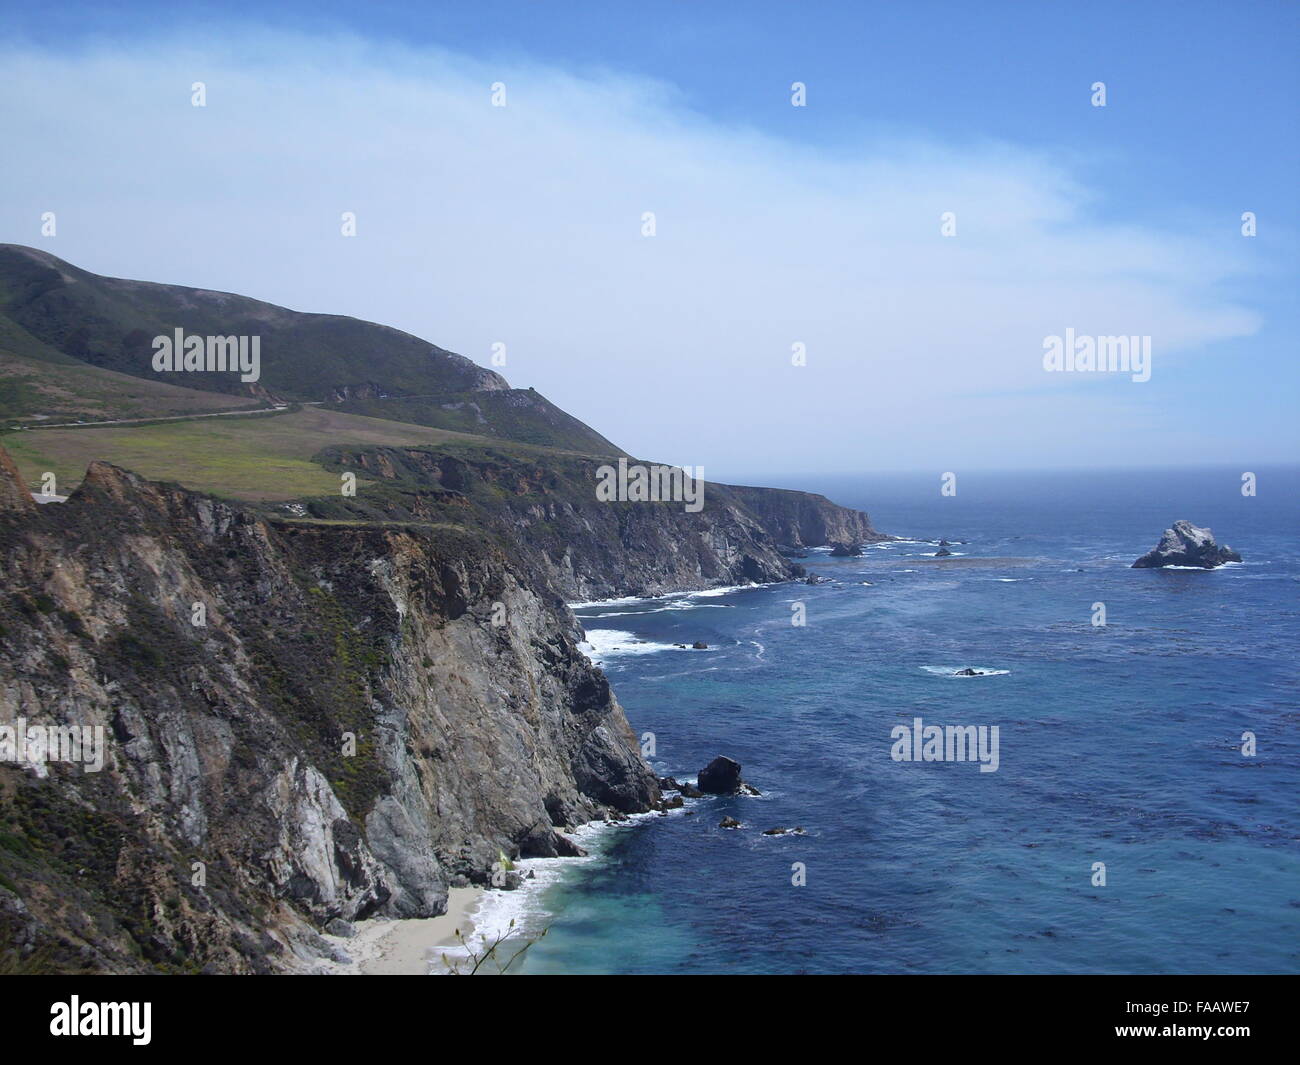 Big Sur in central California coast, USA Stock Photo